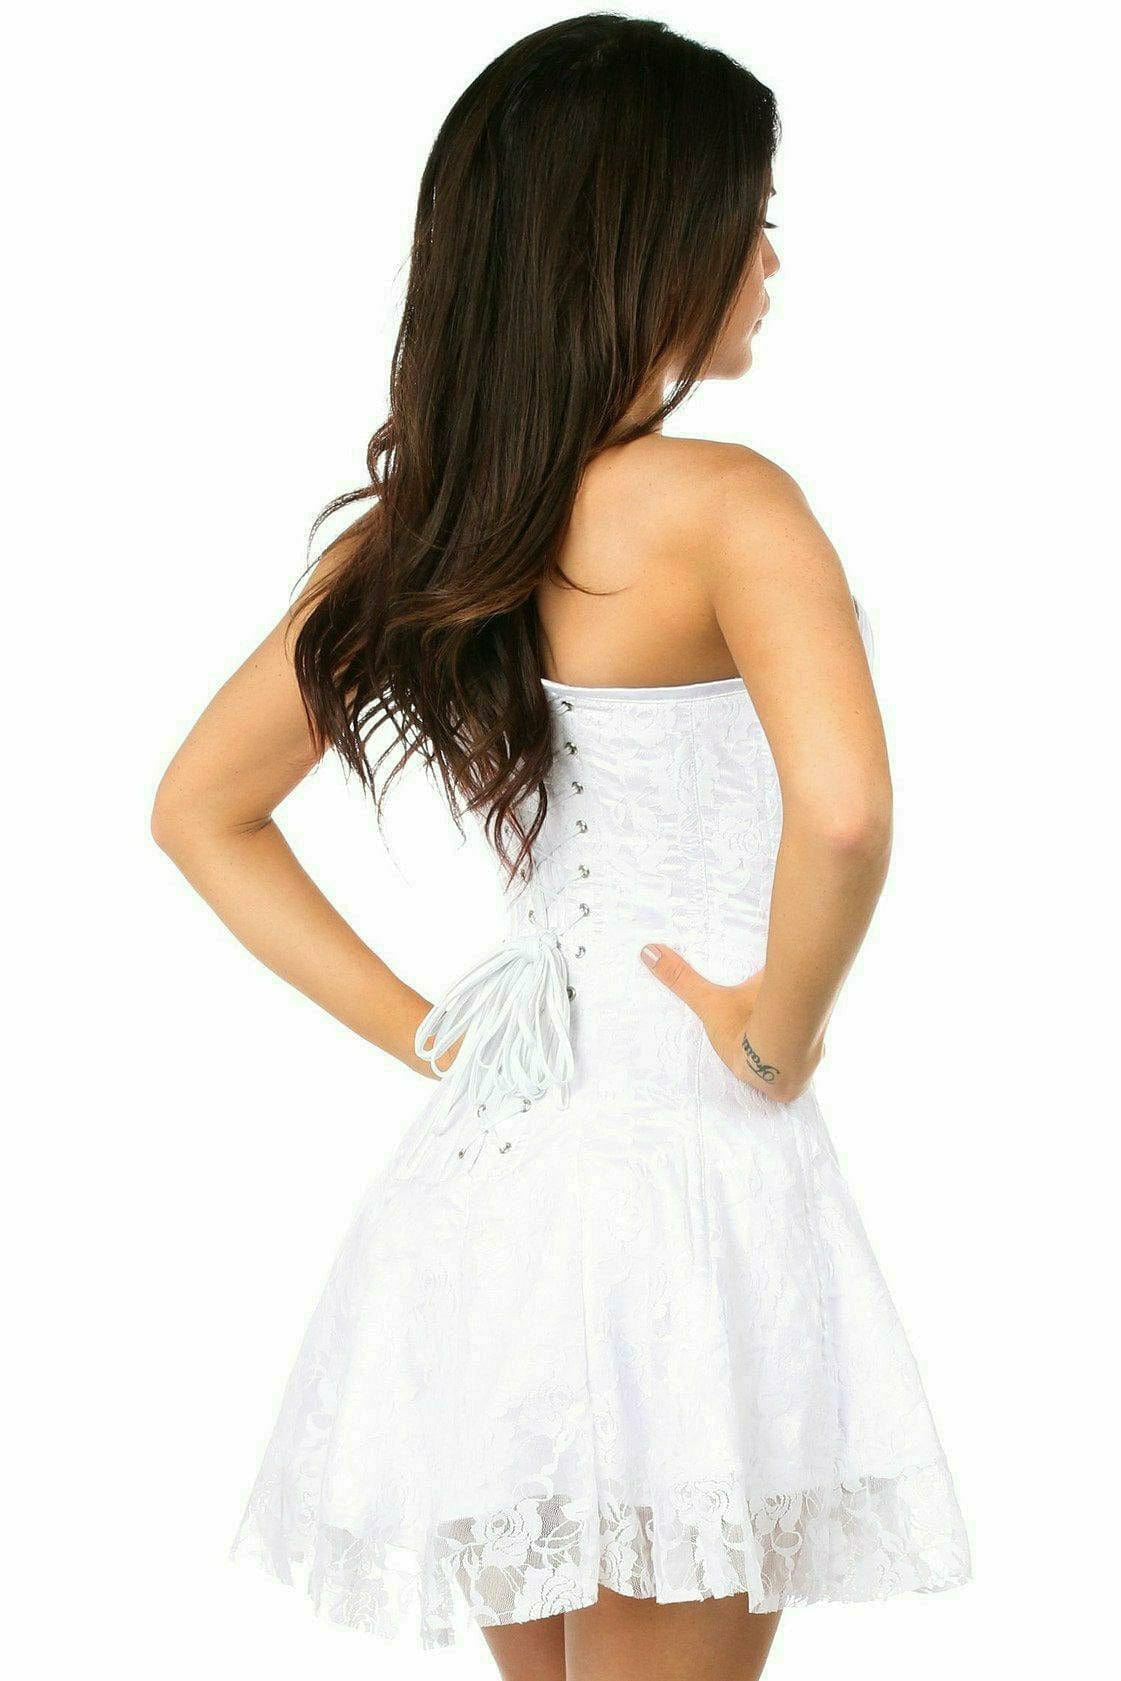 Sexy White Lace Corset Dress Musotica.com